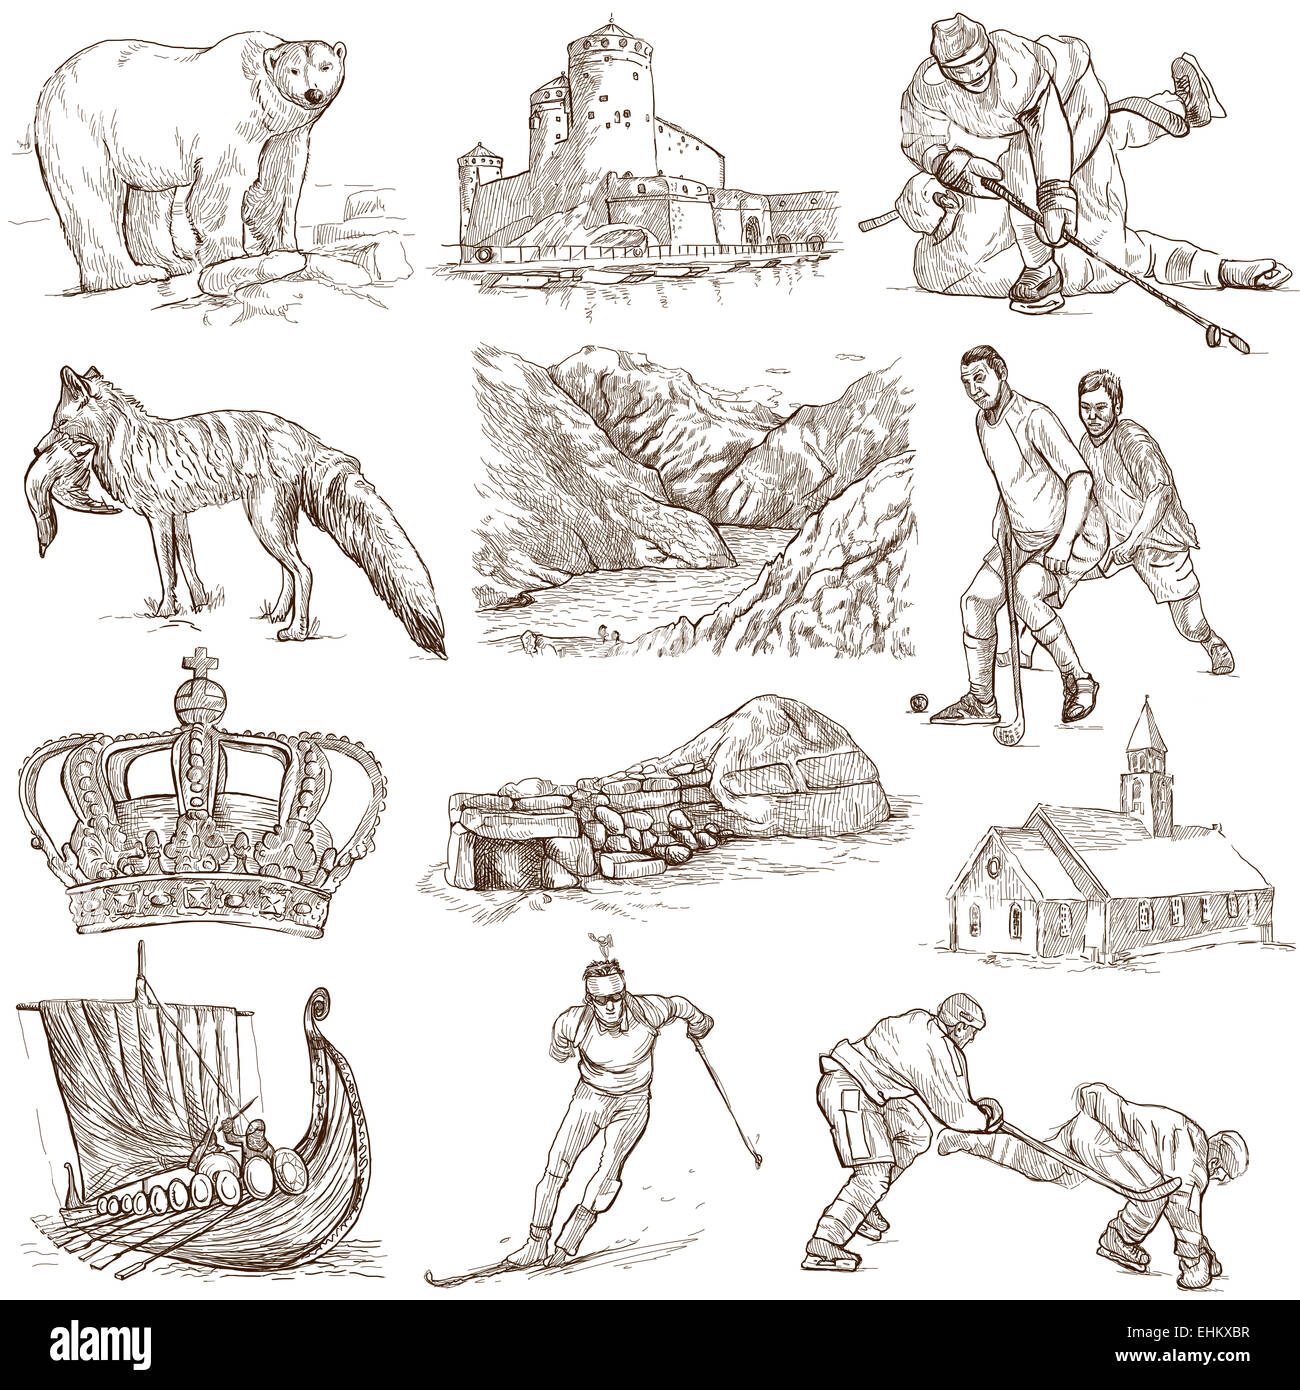 Travel series: SCANDINAVIA - Collection of an hand drawn illustrations. Description: Full sized hand drawn illustrations, origin Stock Photo